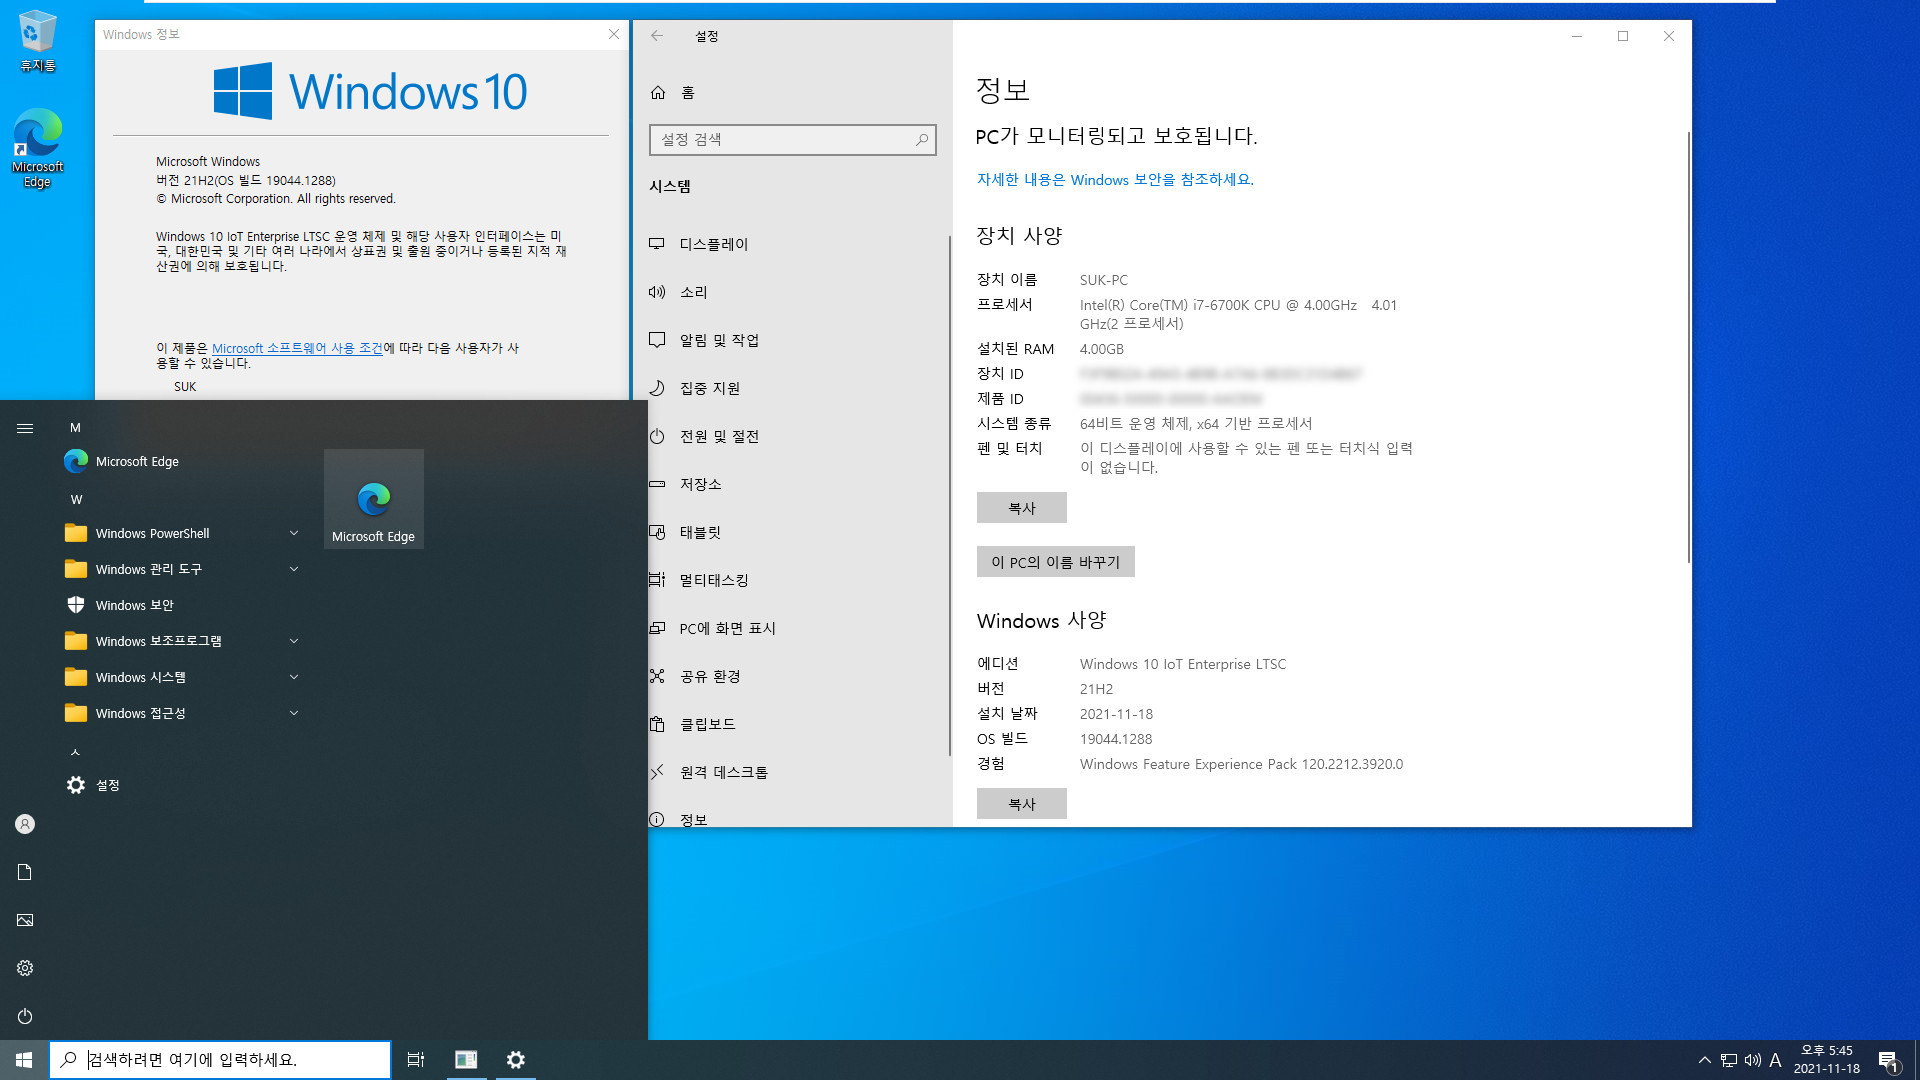 windows_10_iot_enterprise_ltsc_2021 만들기 후 윈도우 설치 테스트 2021-11-18_174519.jpg